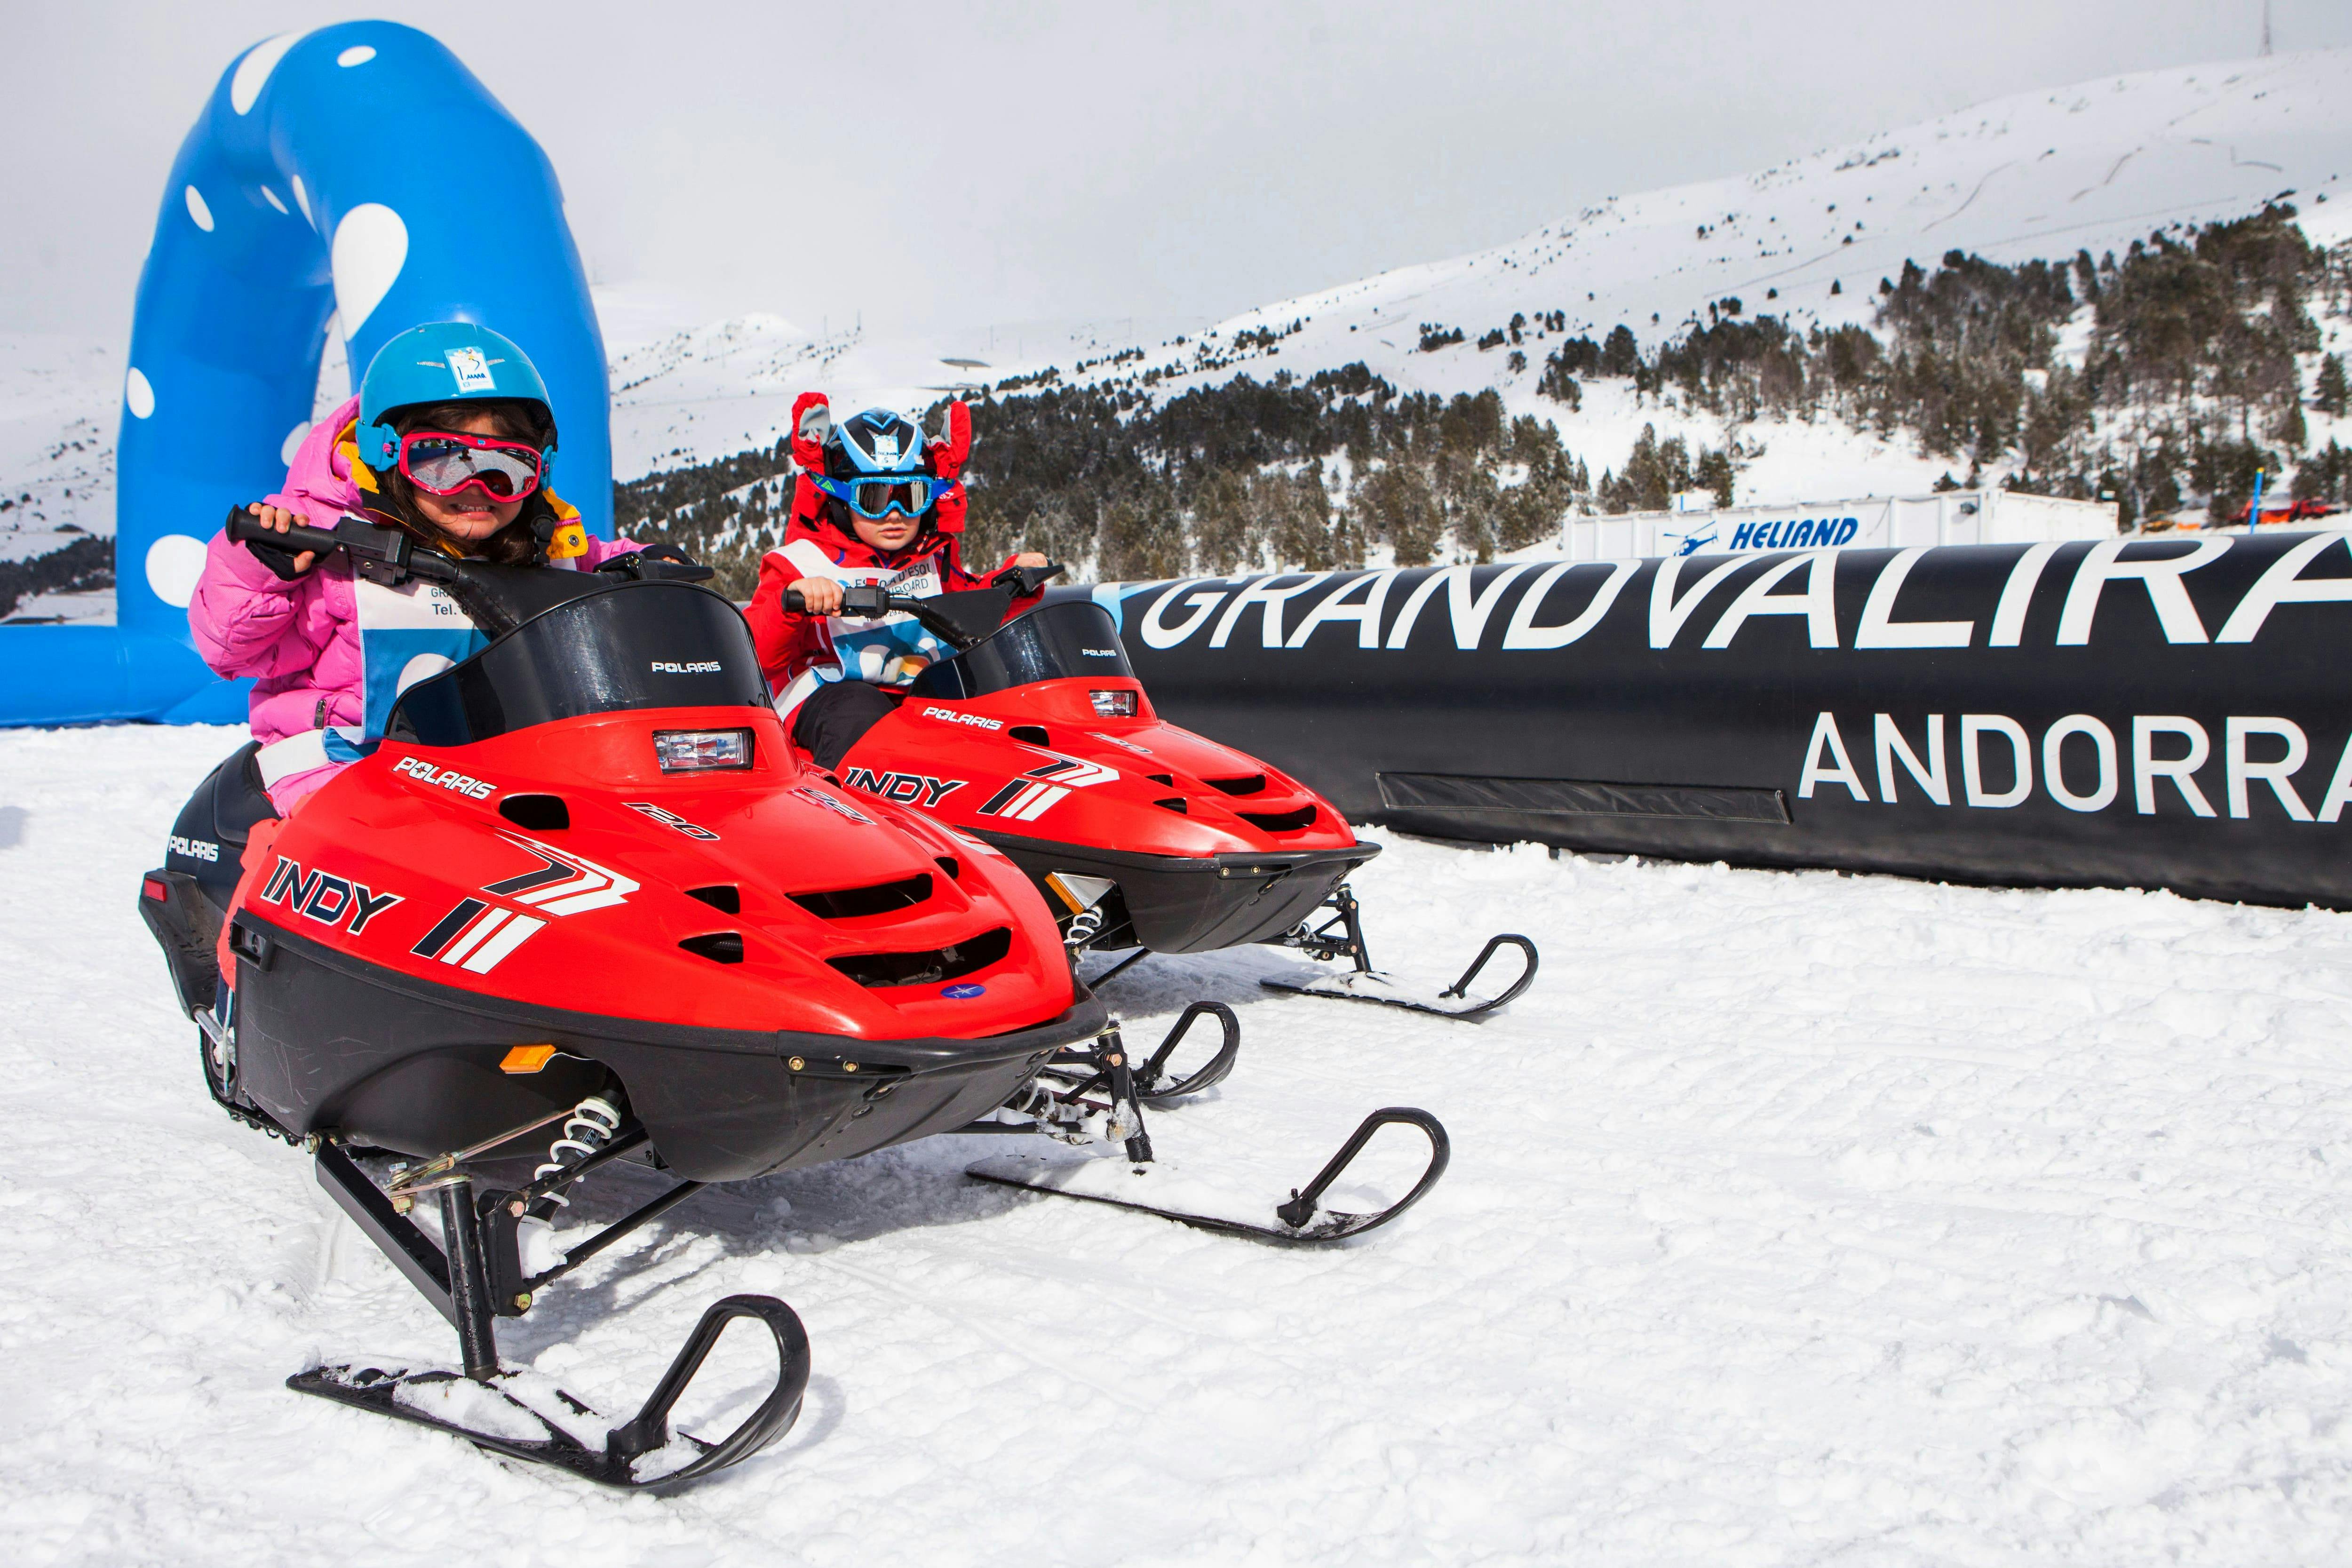 Snowmobile Experience in Grand Valira